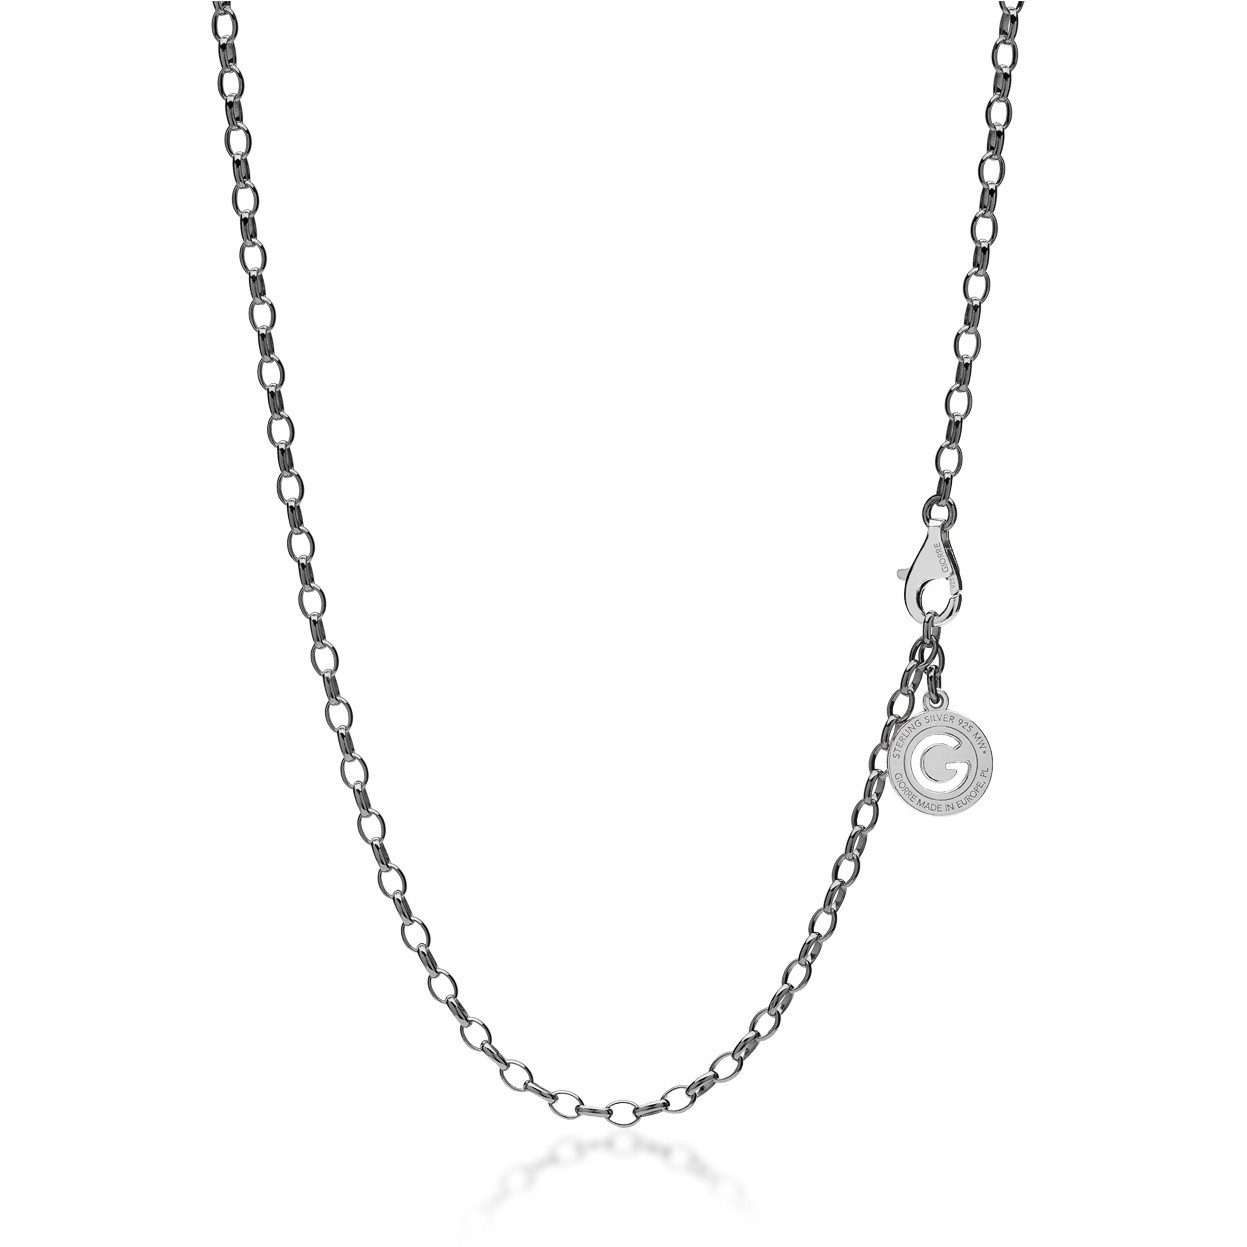 Sterling silver necklace 55-65 cm black rhodium, light rhodium clasp, link 4x3 mm